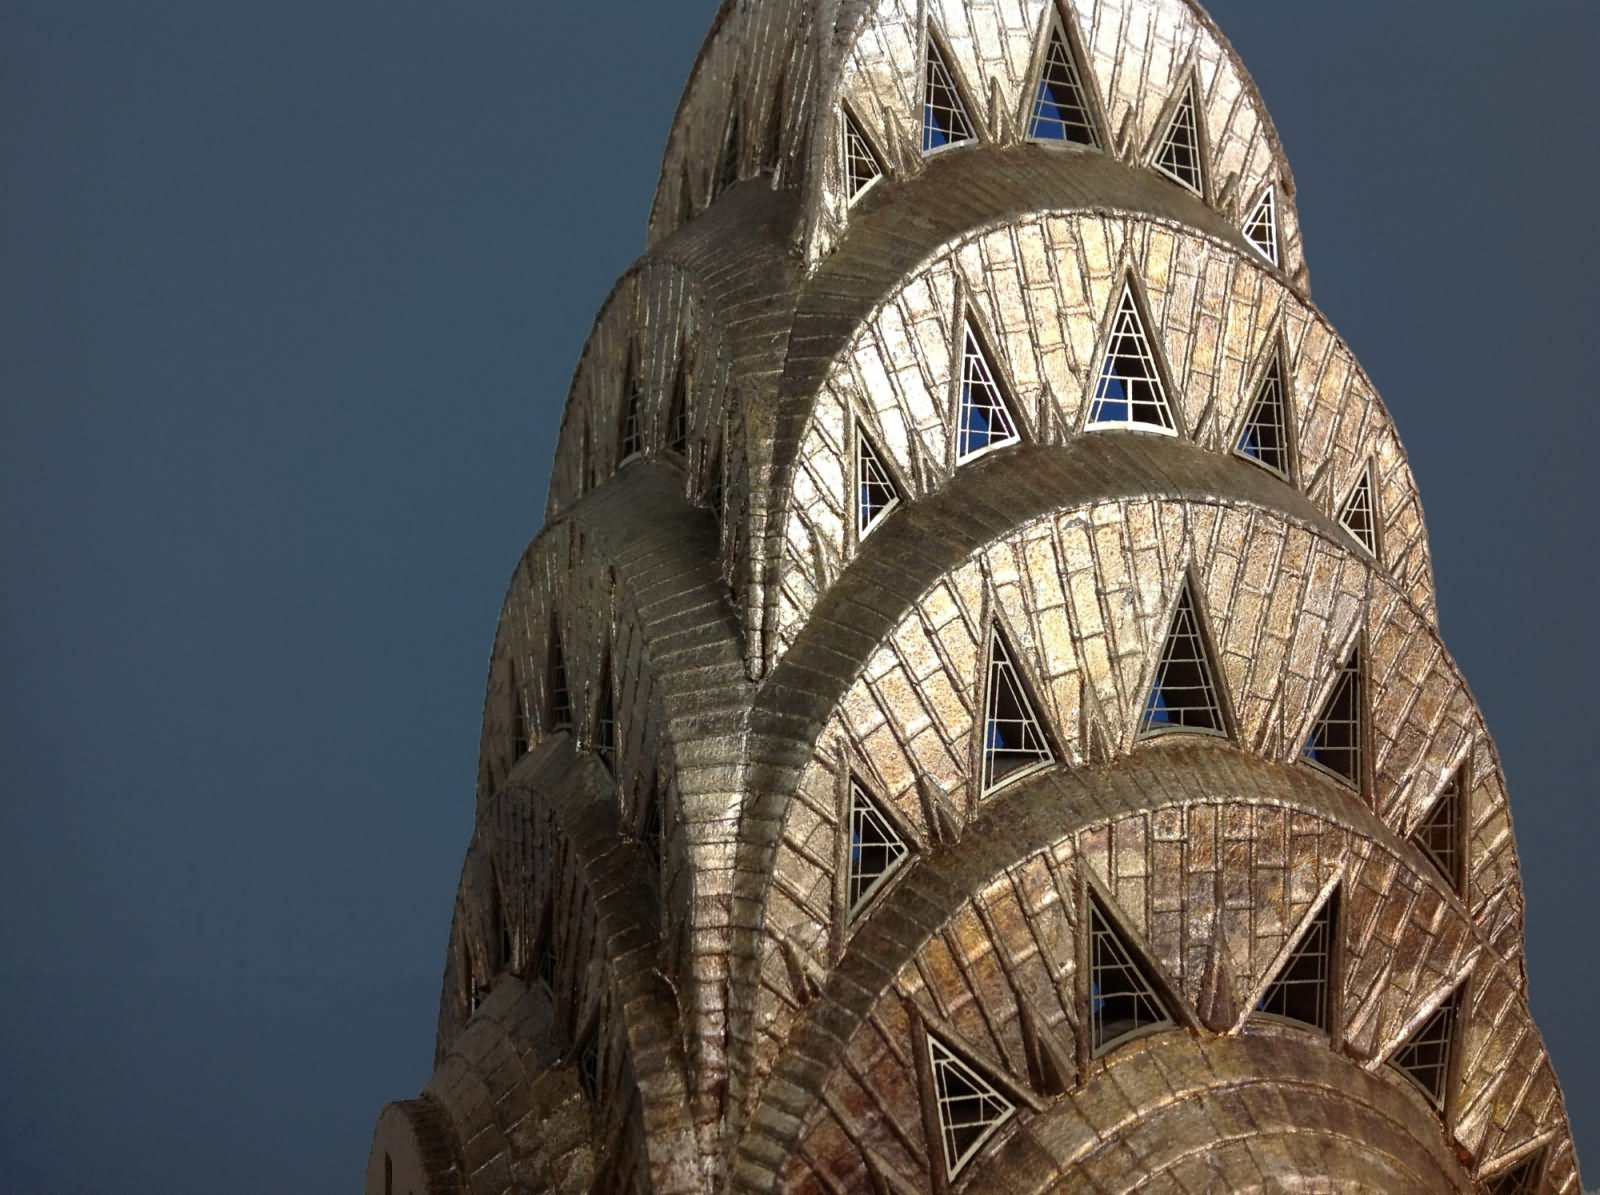 Closeup Image Of The Chrysler Building